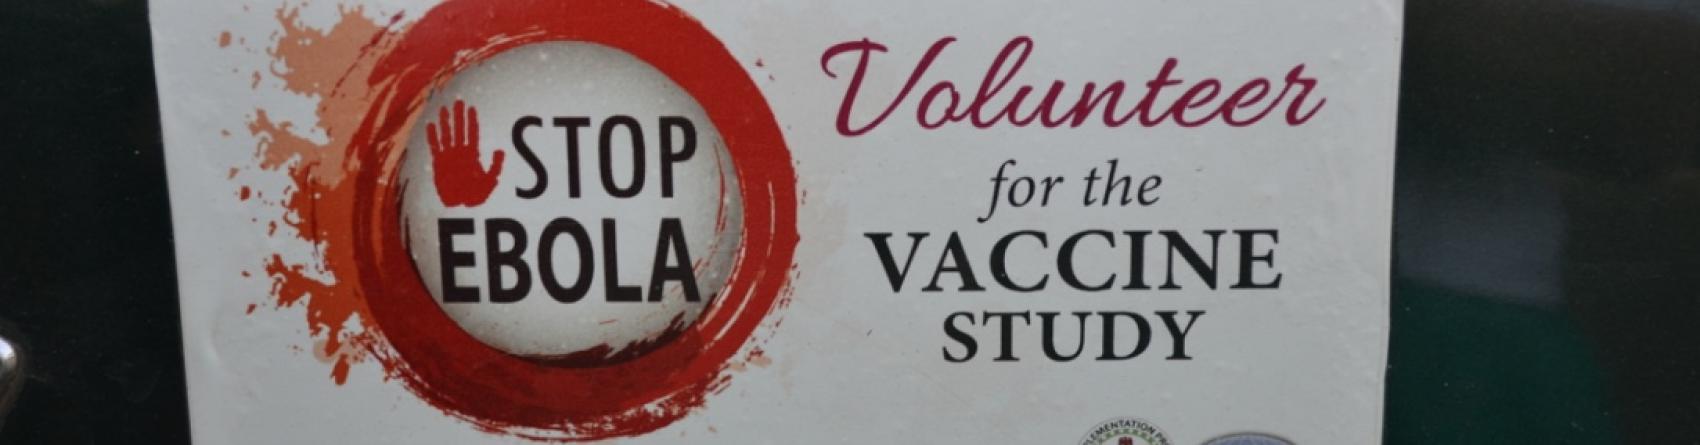 Ebola vaccine trial recruitment sign